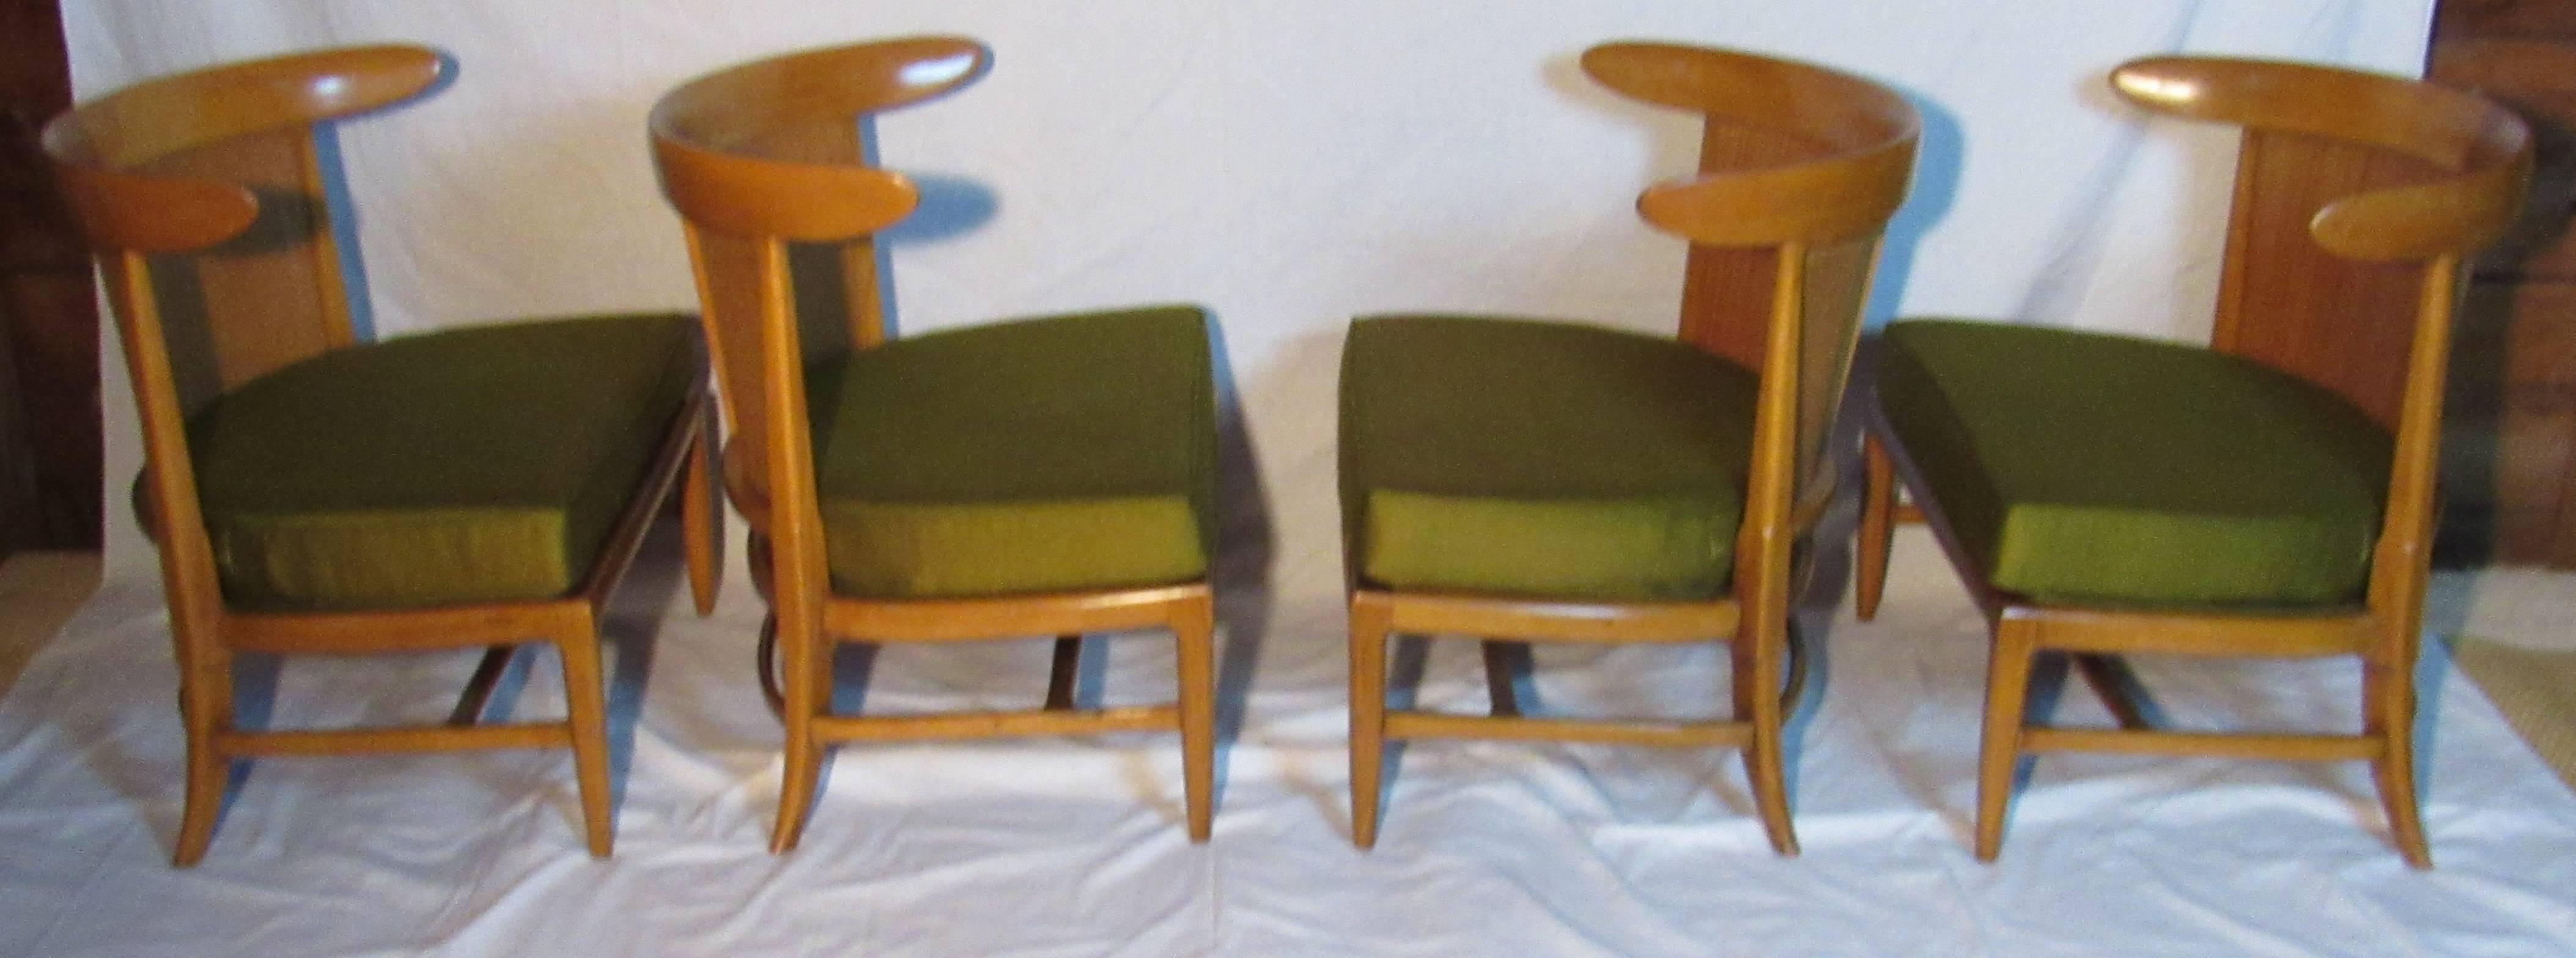 tomlinson mid century furniture